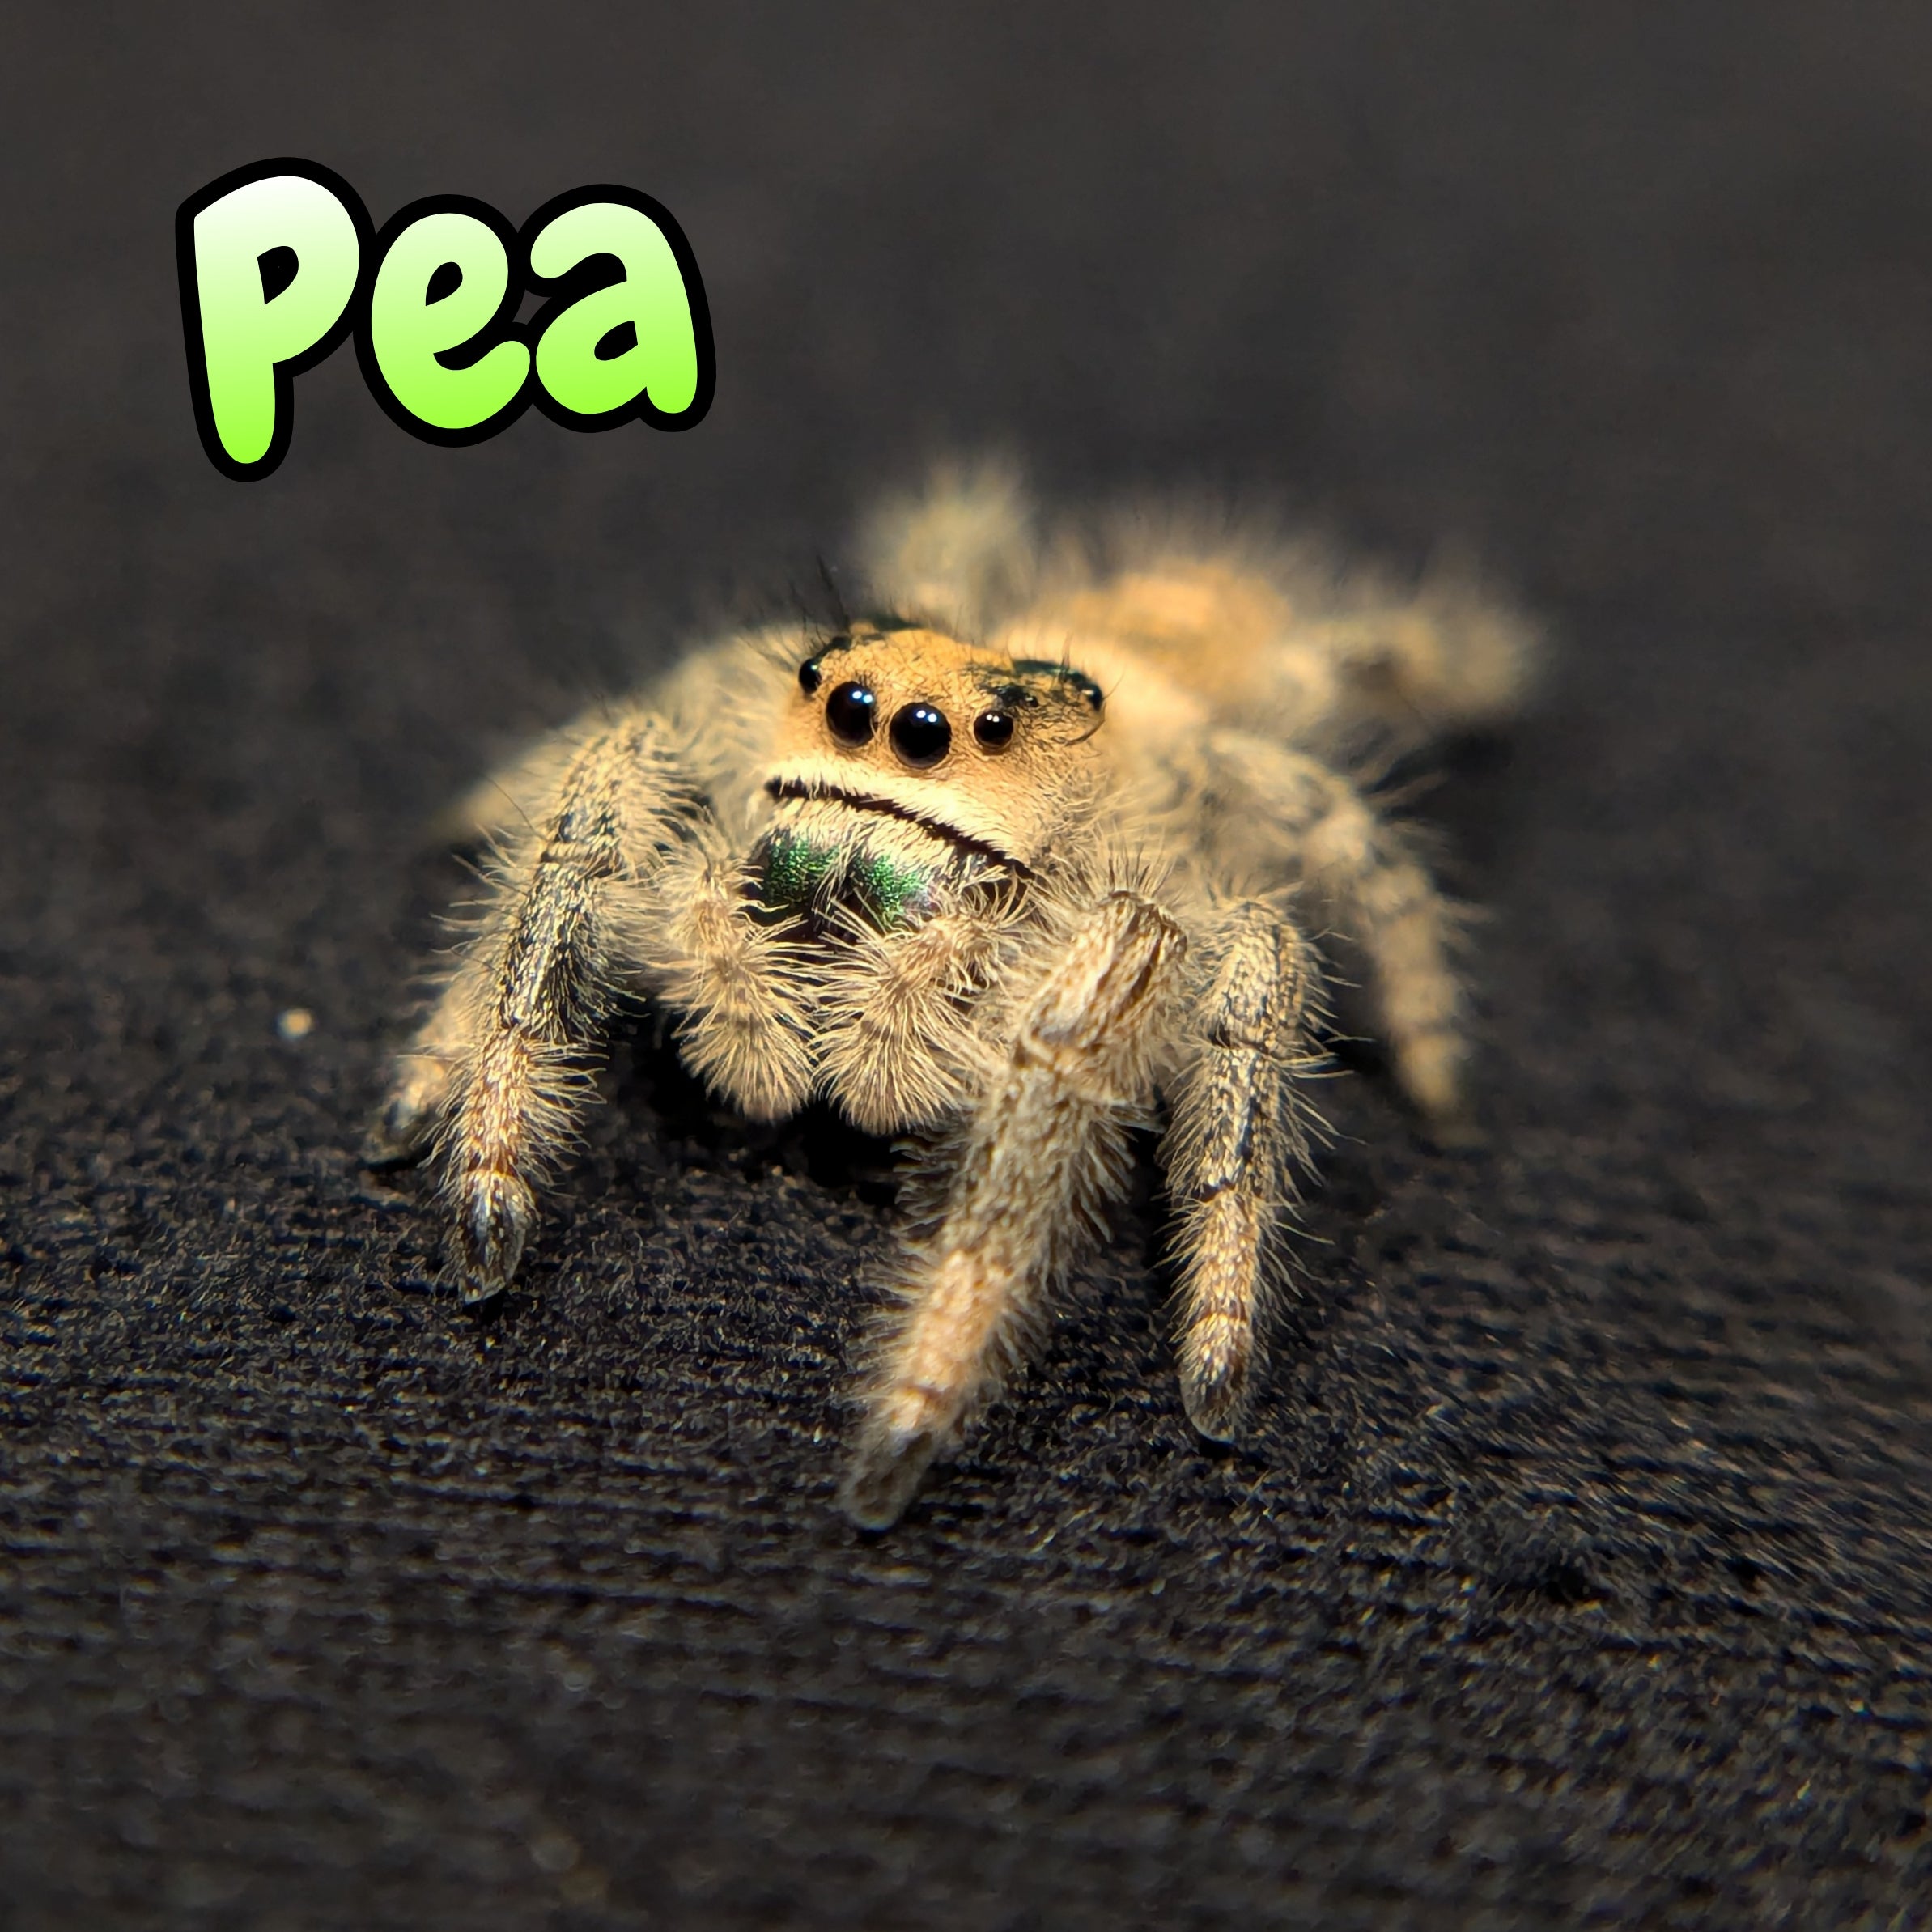 Regal Jumping Spider "Pea"